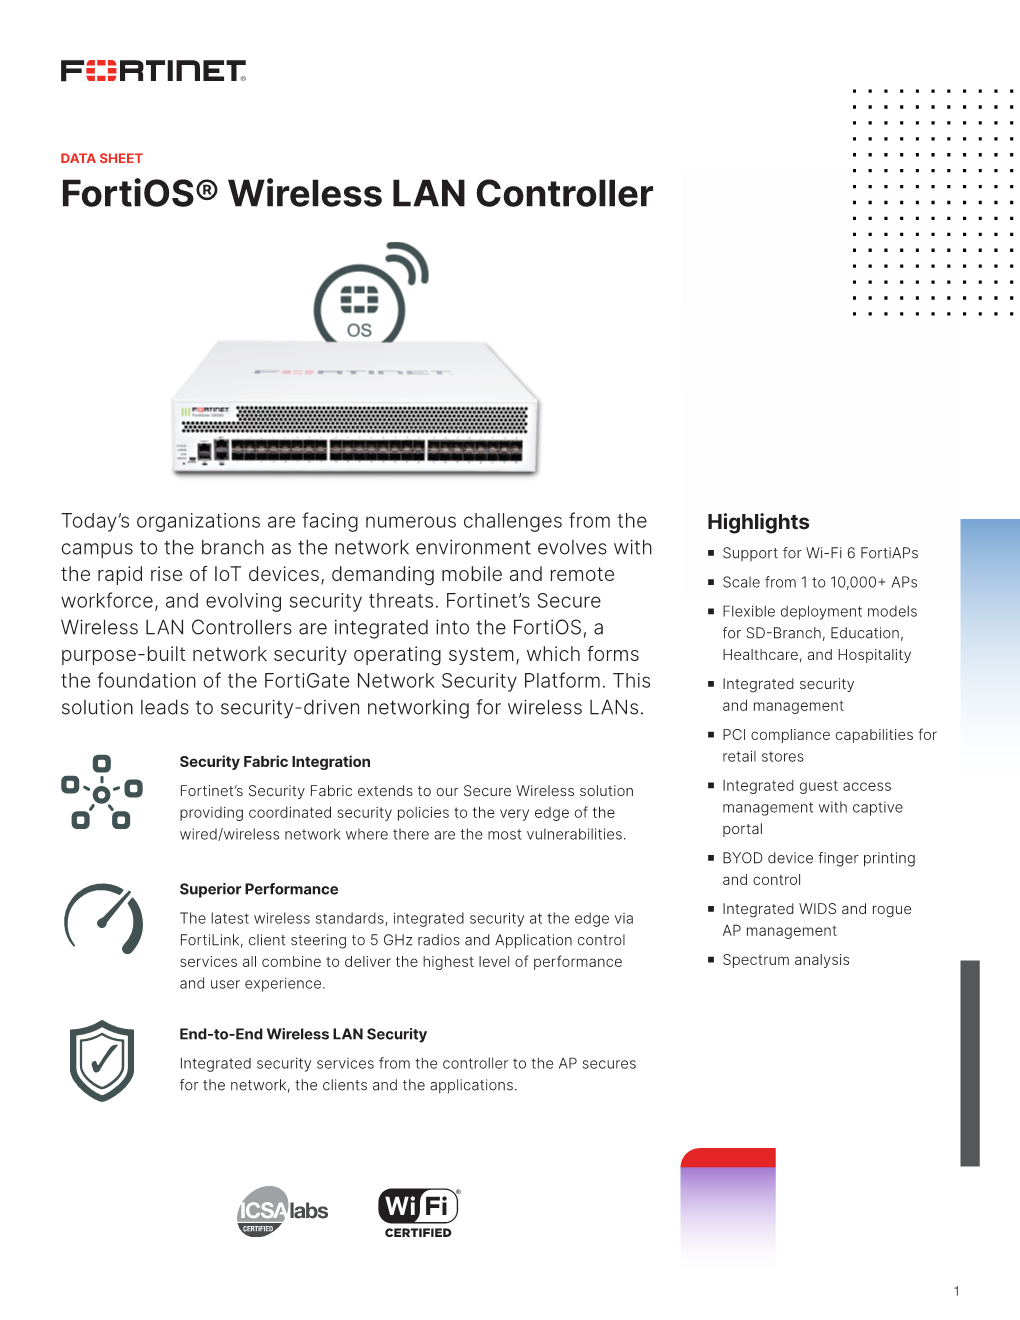 Fortios Wireless LAN Controller Data Sheet